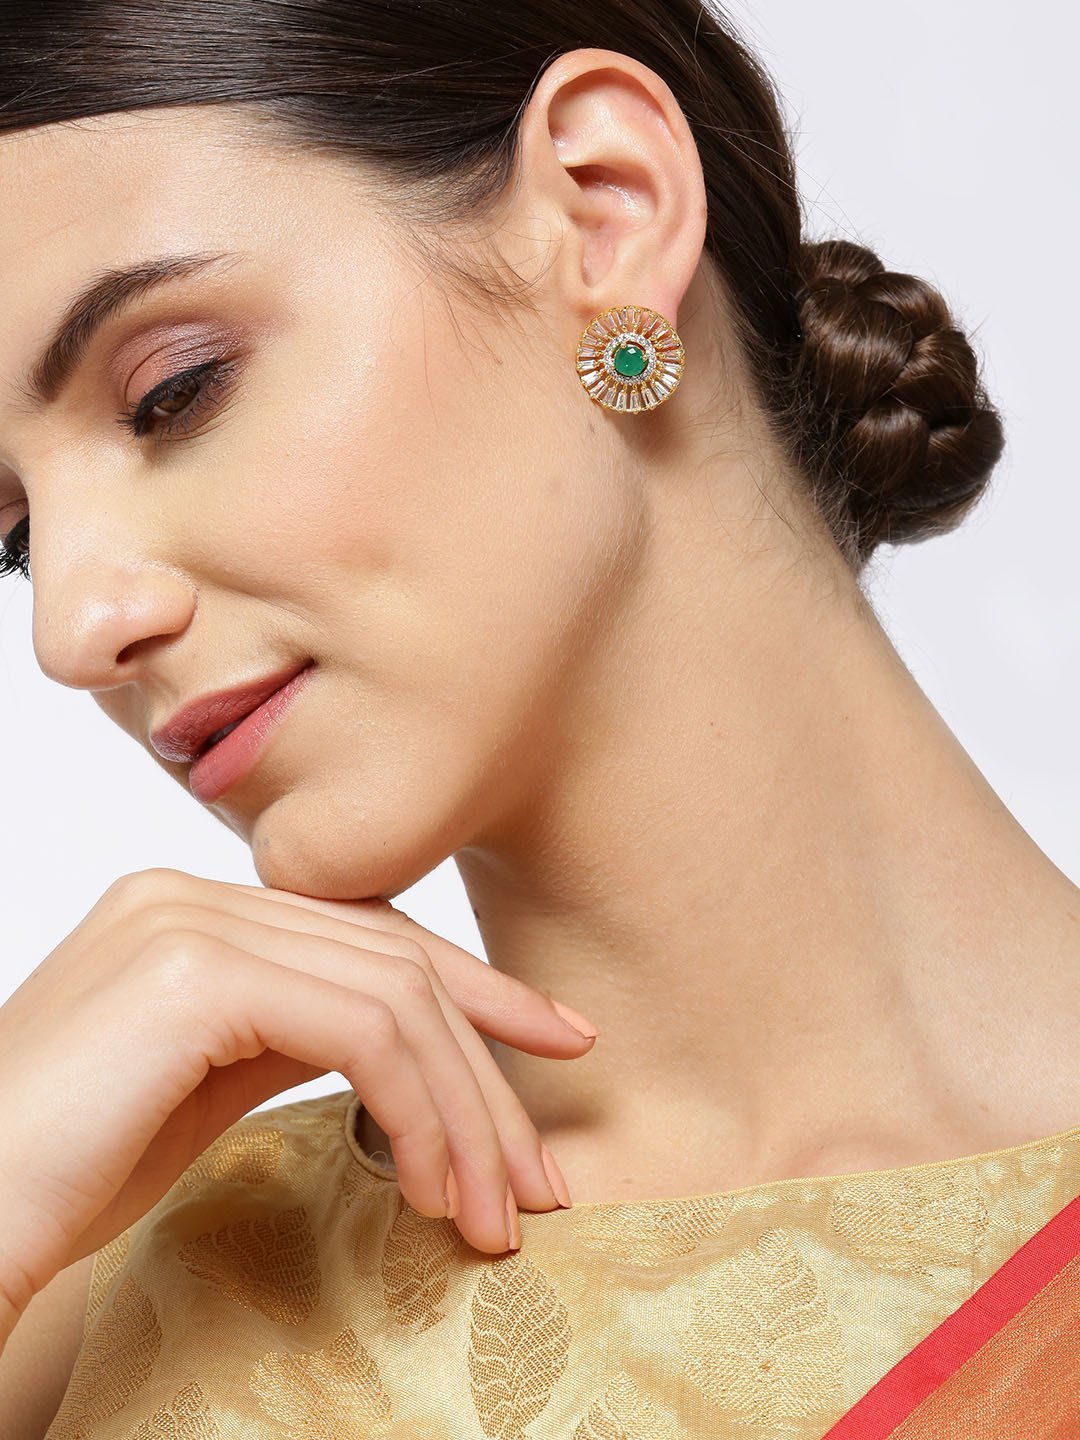 Women's Gold-Plated American Diamond and Emerald Studded Stud Earrings - Priyaasi